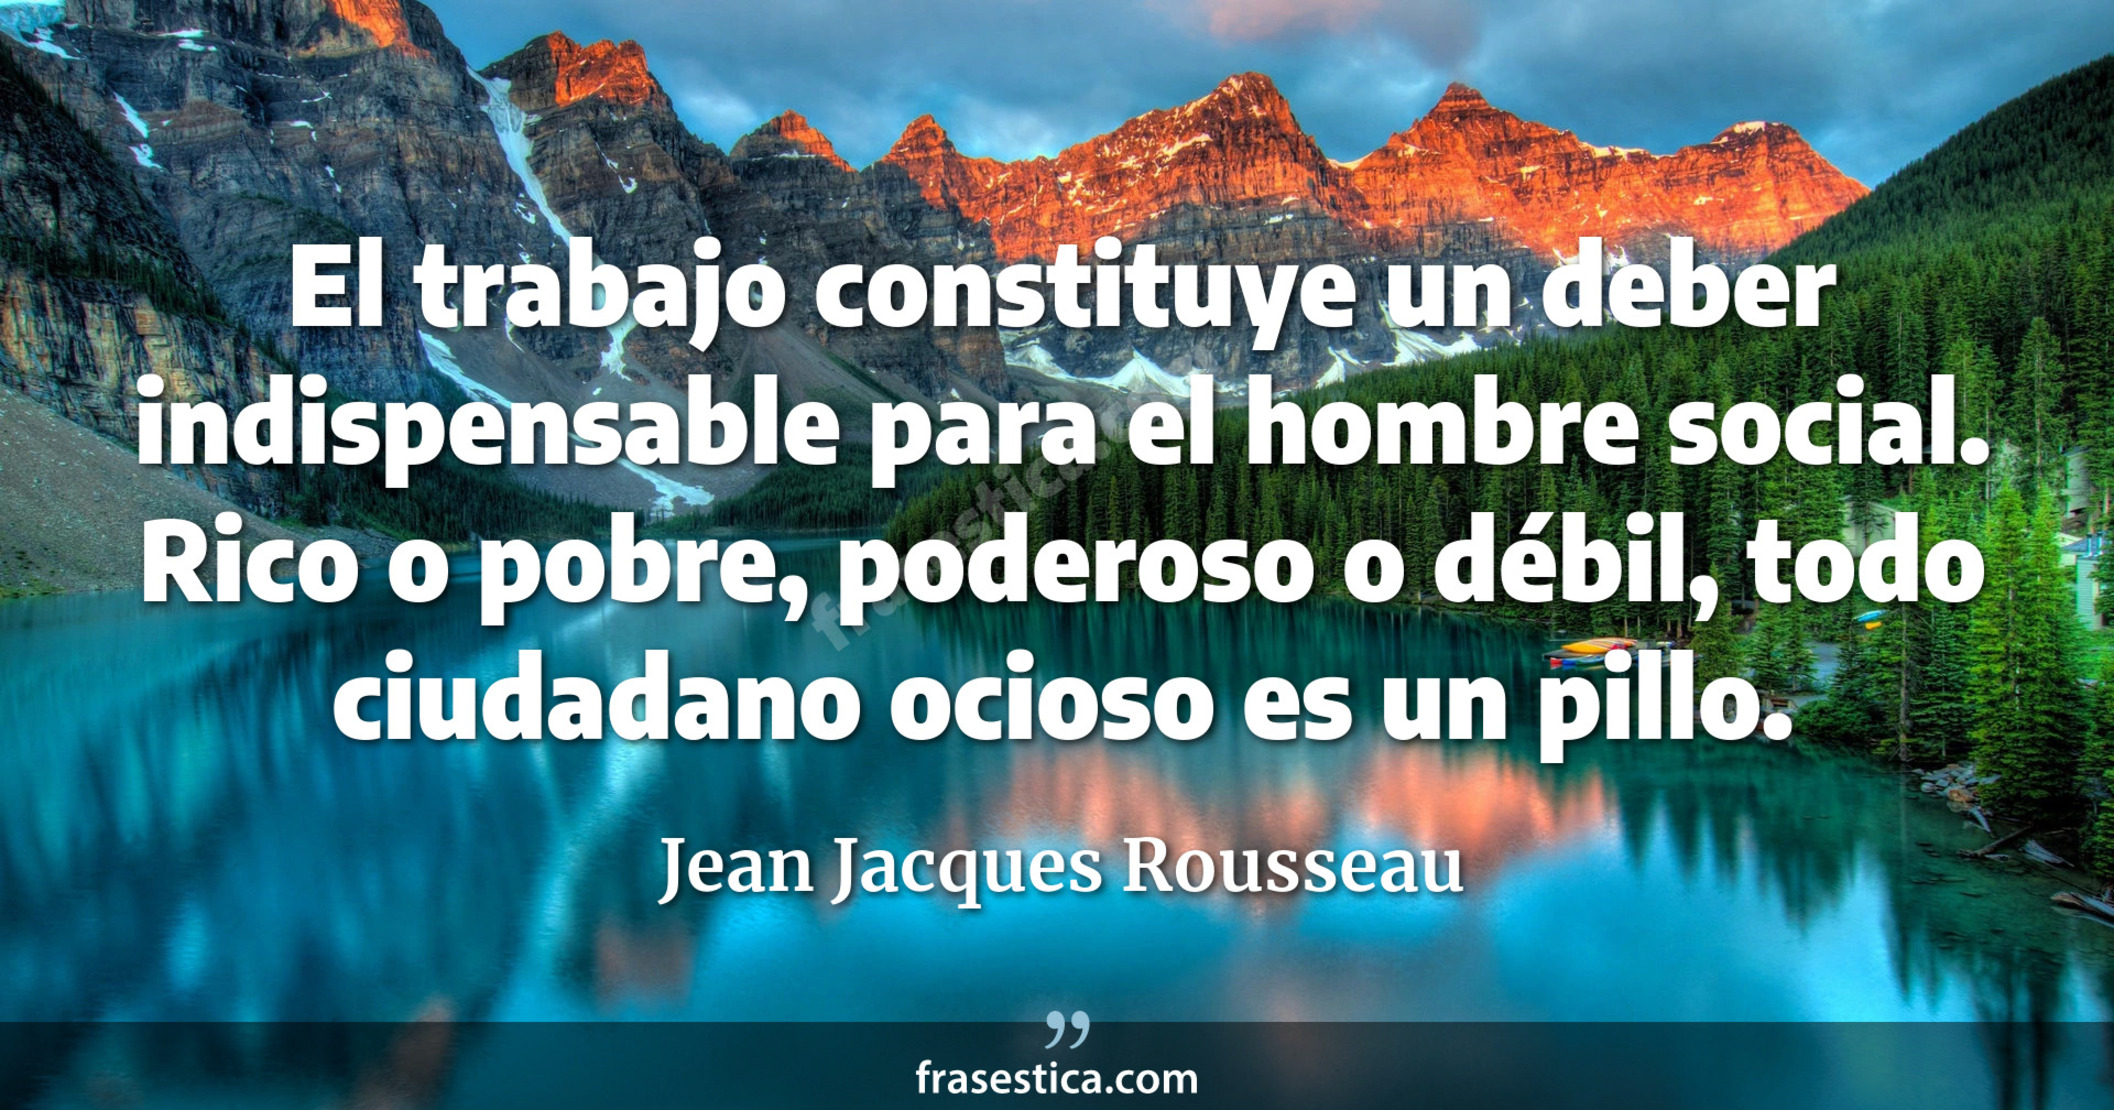 El trabajo constituye un deber indispensable para el hombre social. Rico o pobre, poderoso o débil, todo ciudadano ocioso es un pillo. - Jean Jacques Rousseau